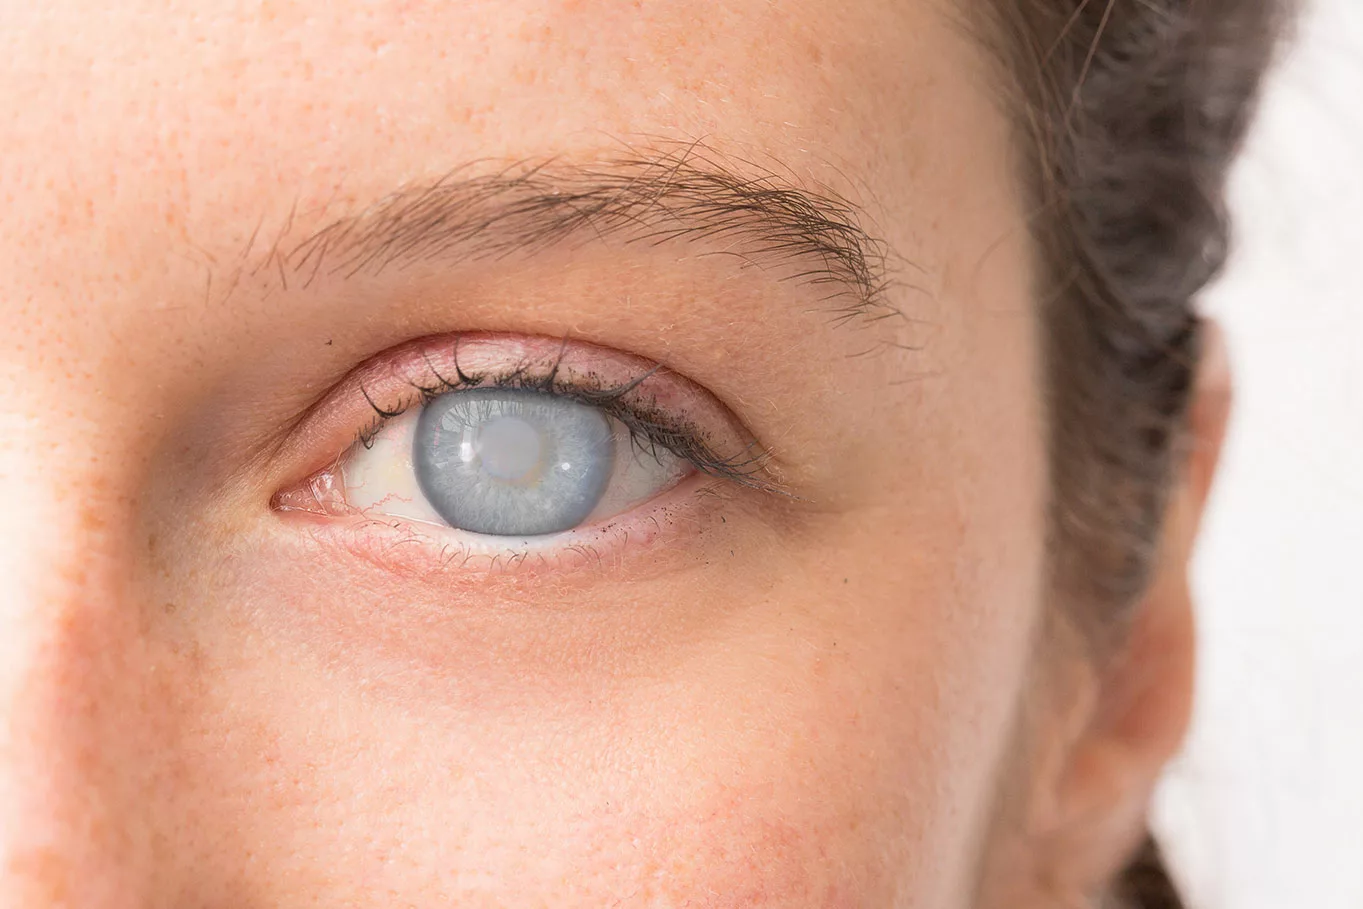 Woman's eye with cataract